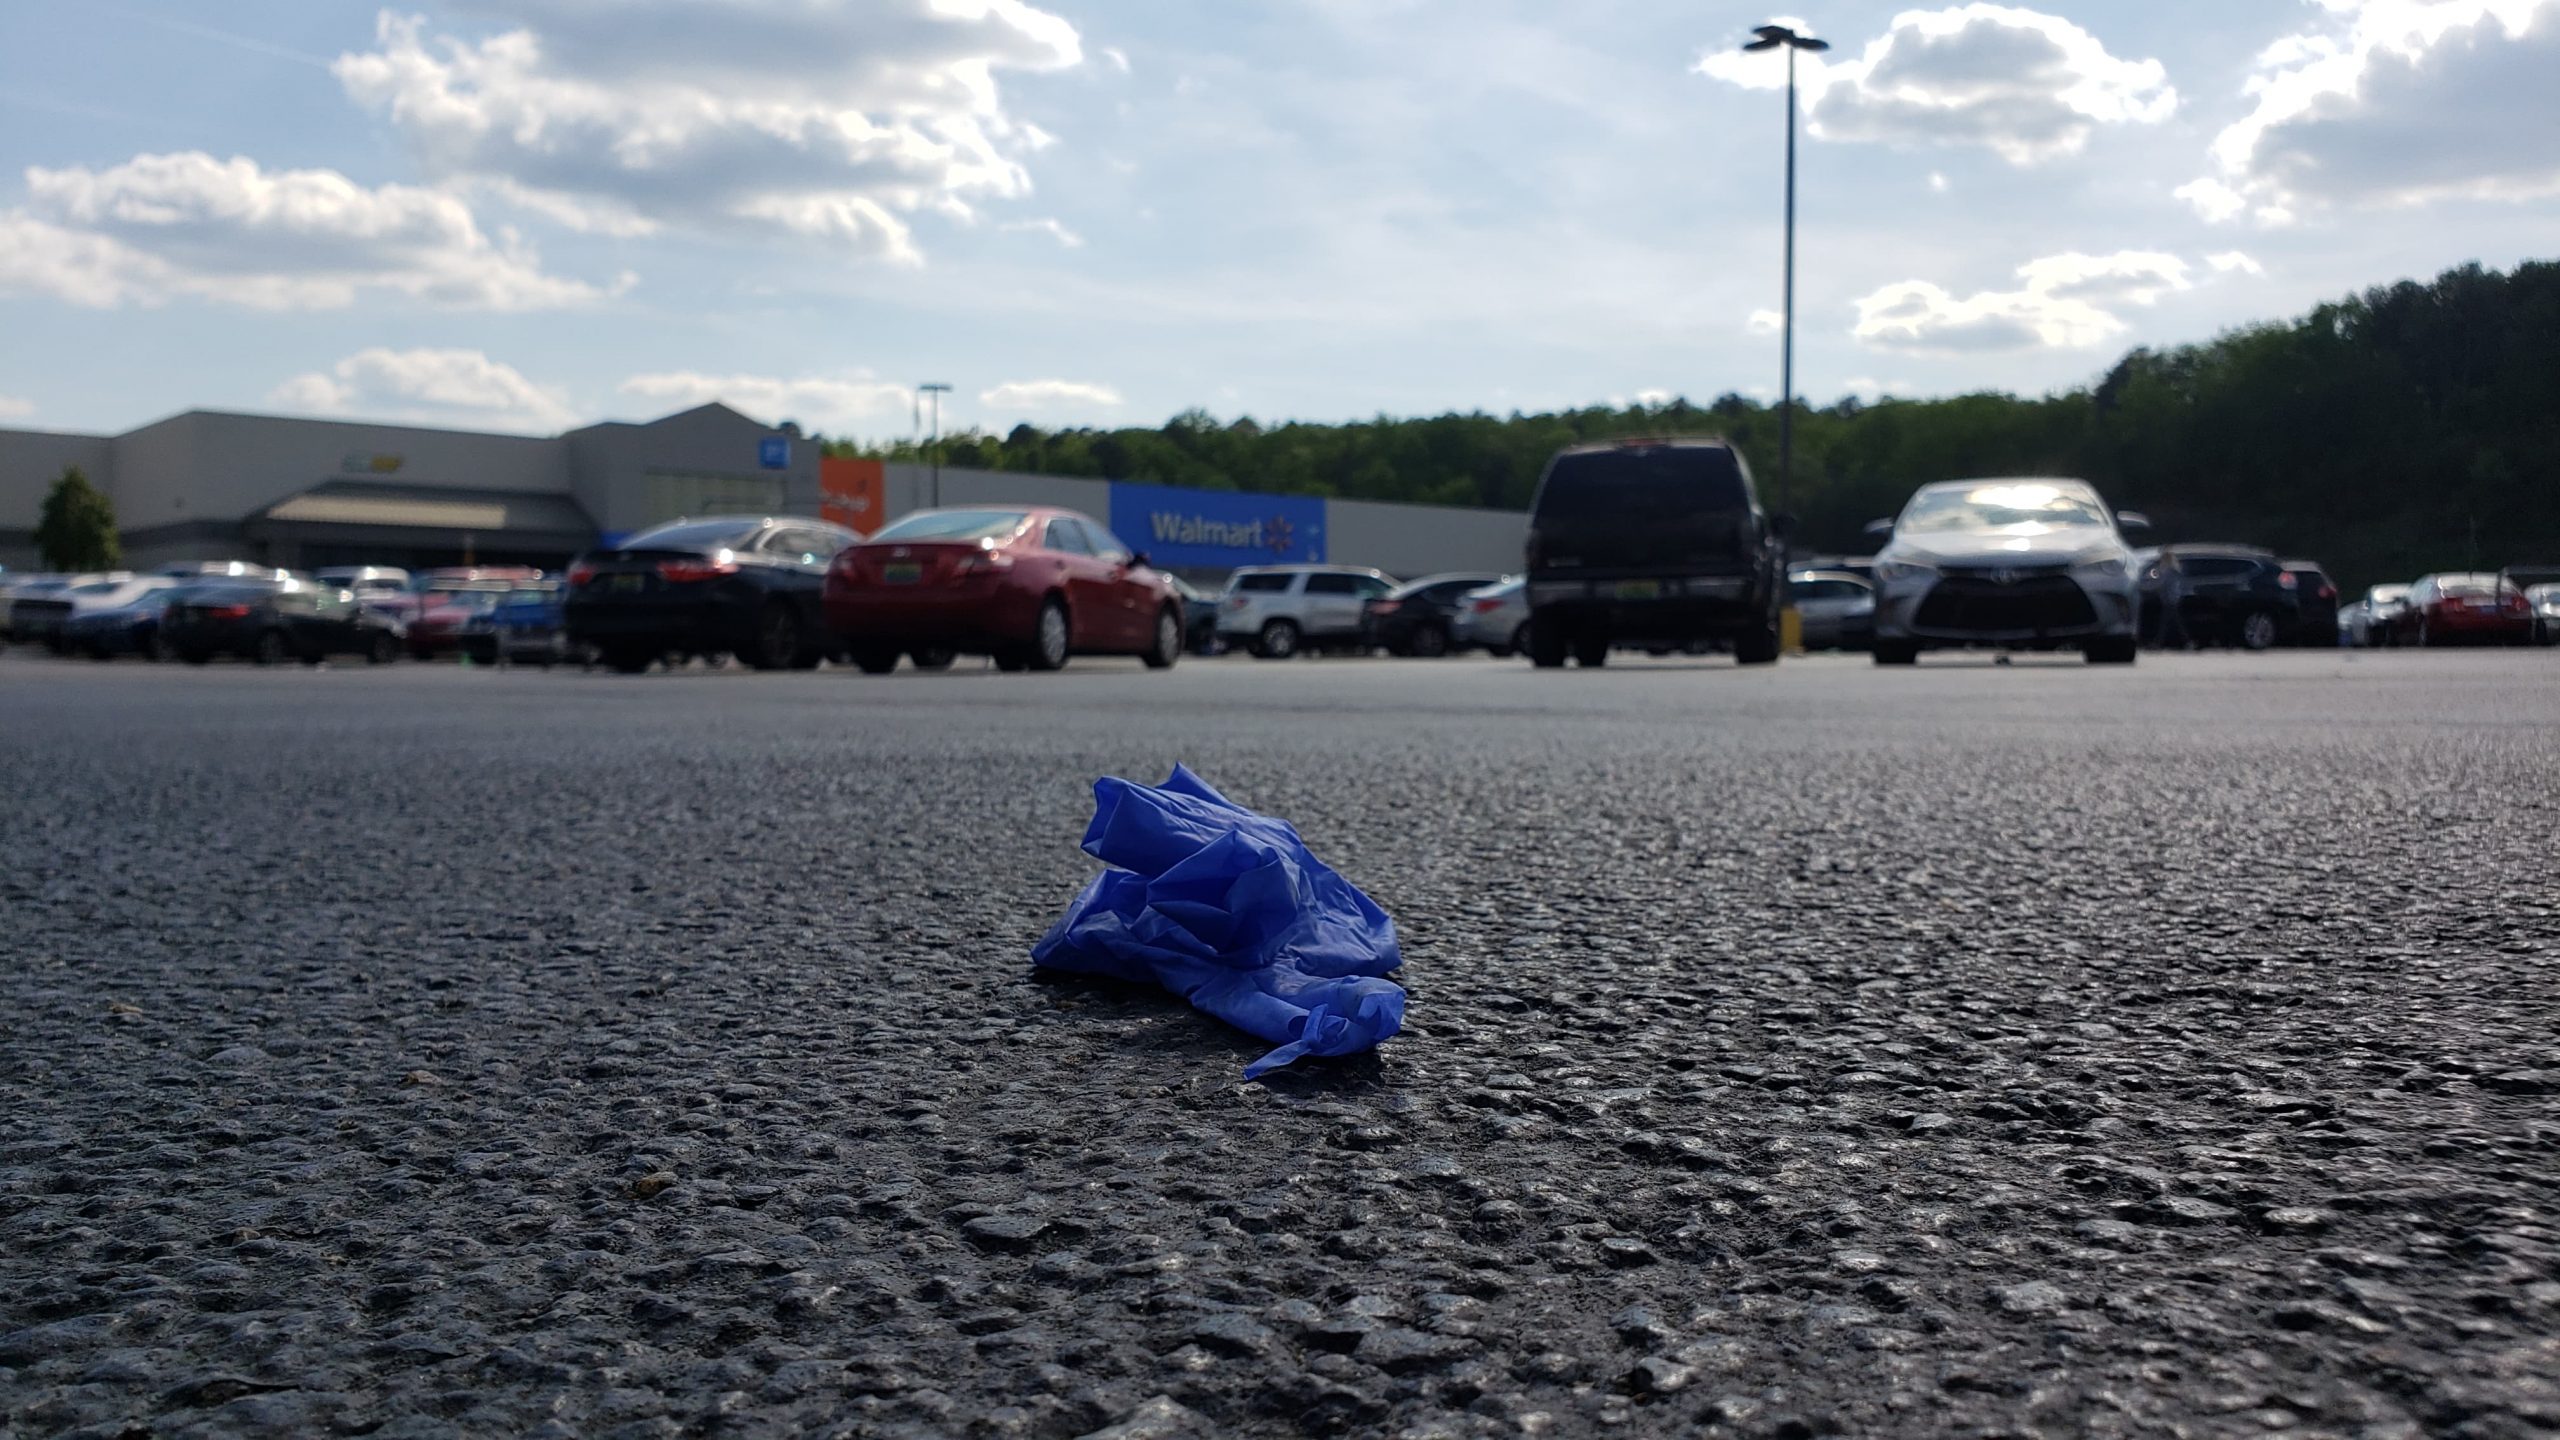 Trussville Walmart parking lot littered with gloves, masks